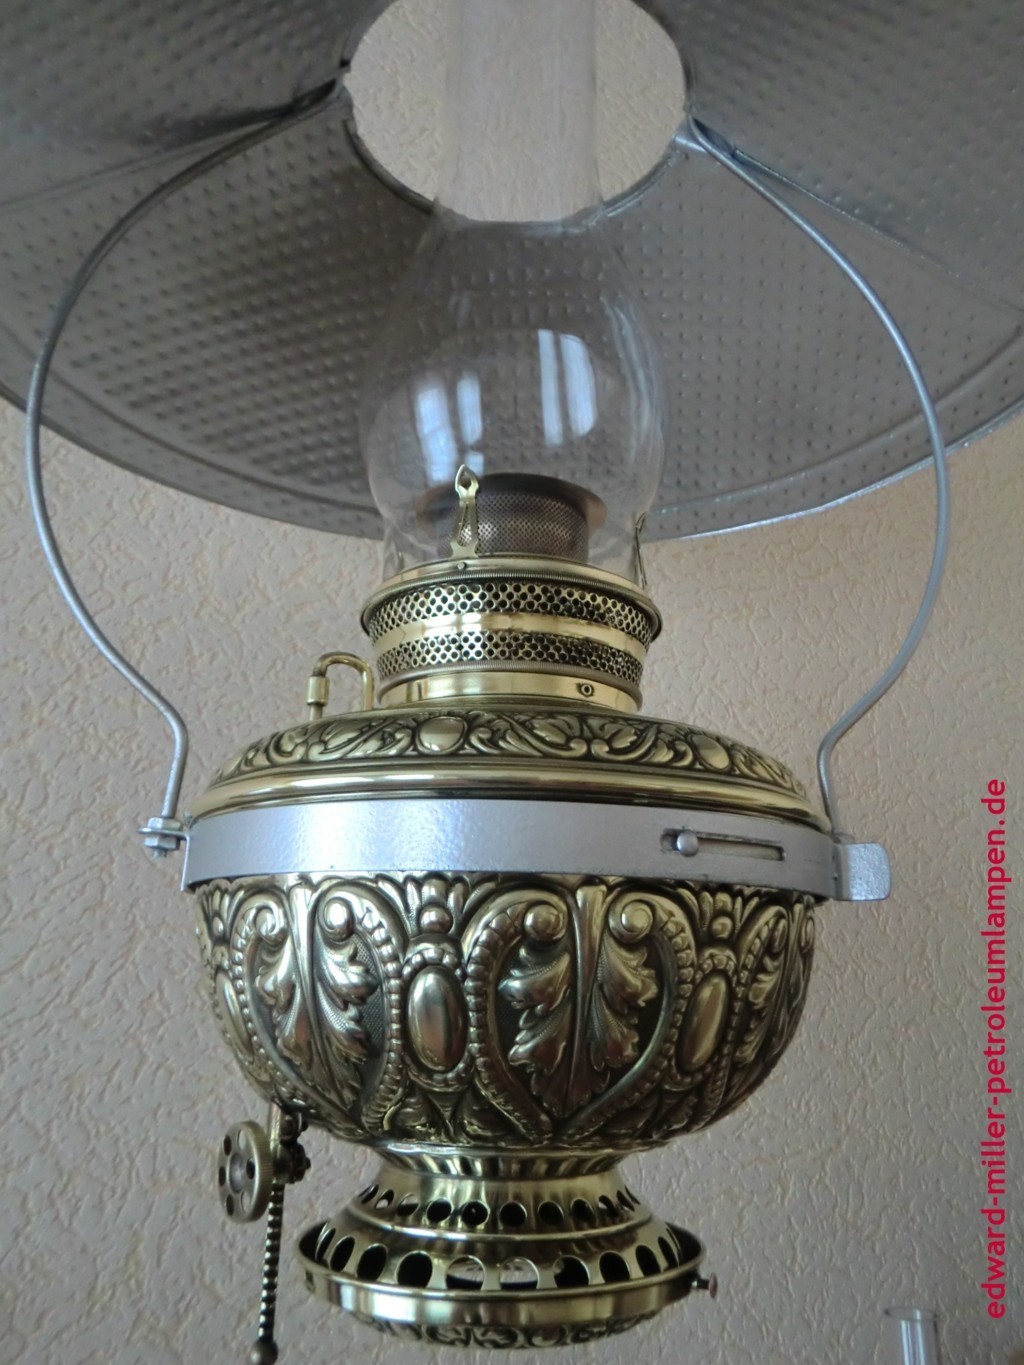 The Miller Lamp